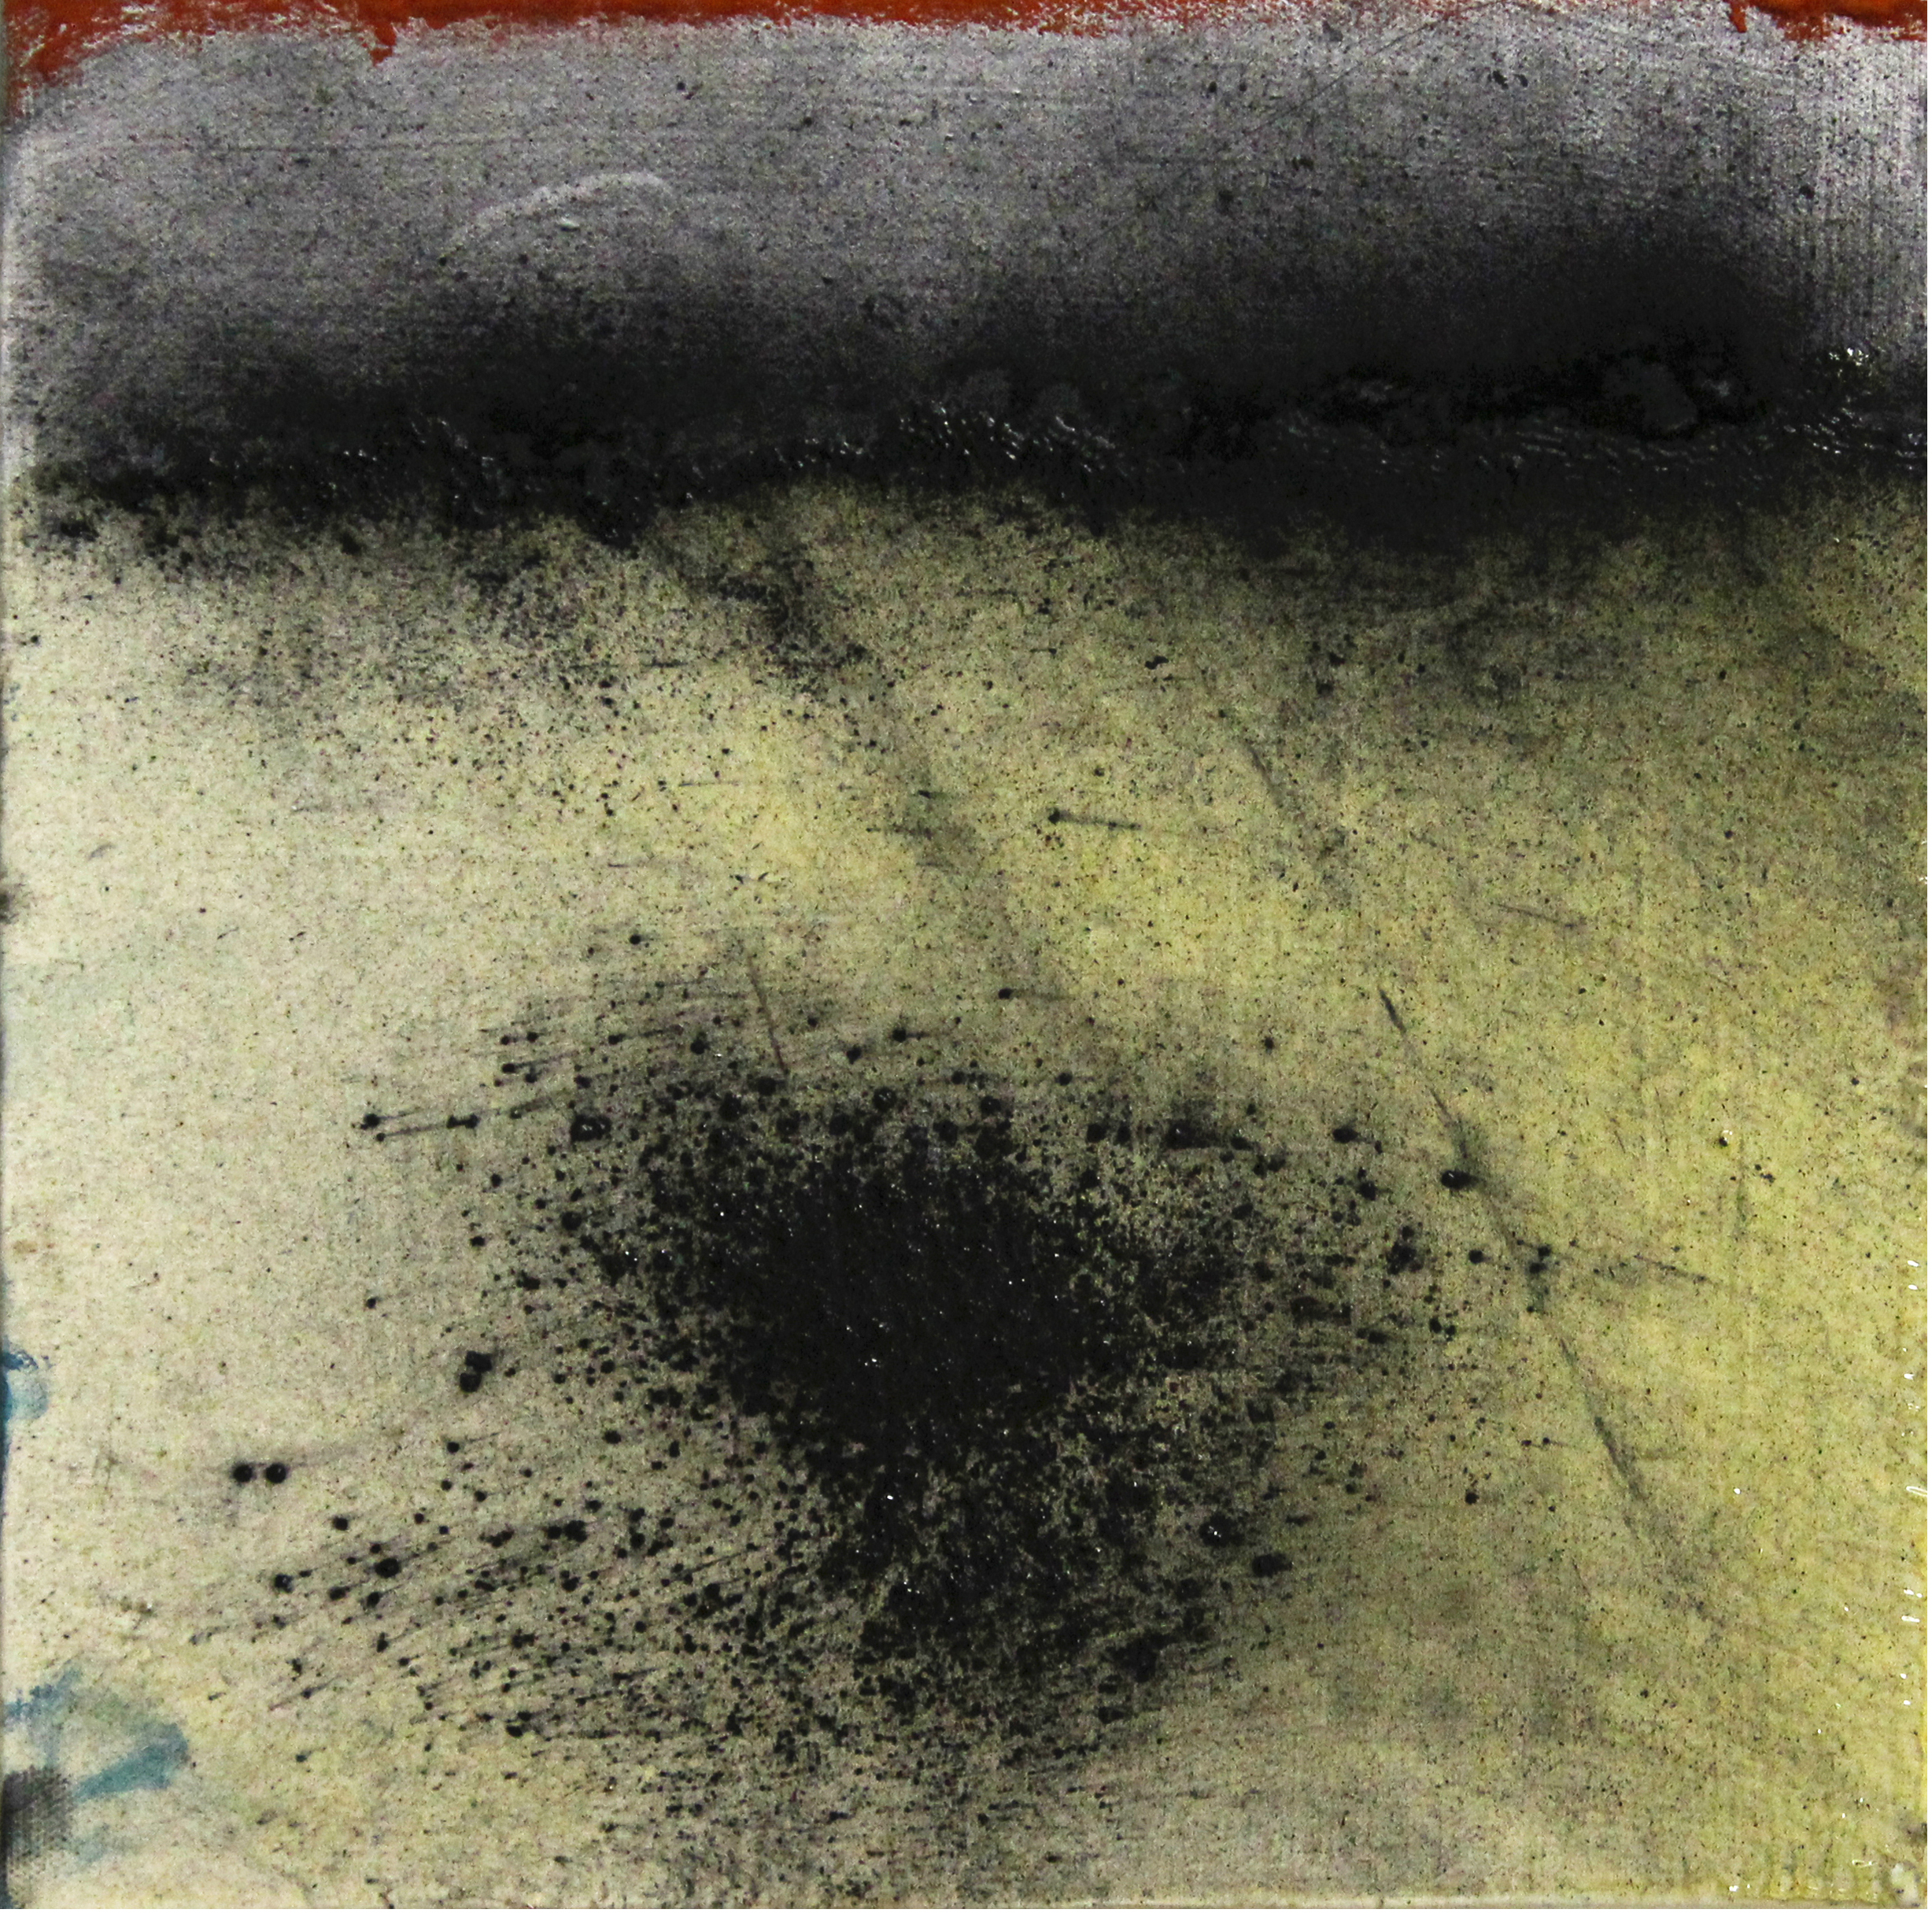    Truffle Poodles.  Oil on canvas.&nbsp;    12" x 12". 2015.&nbsp;        